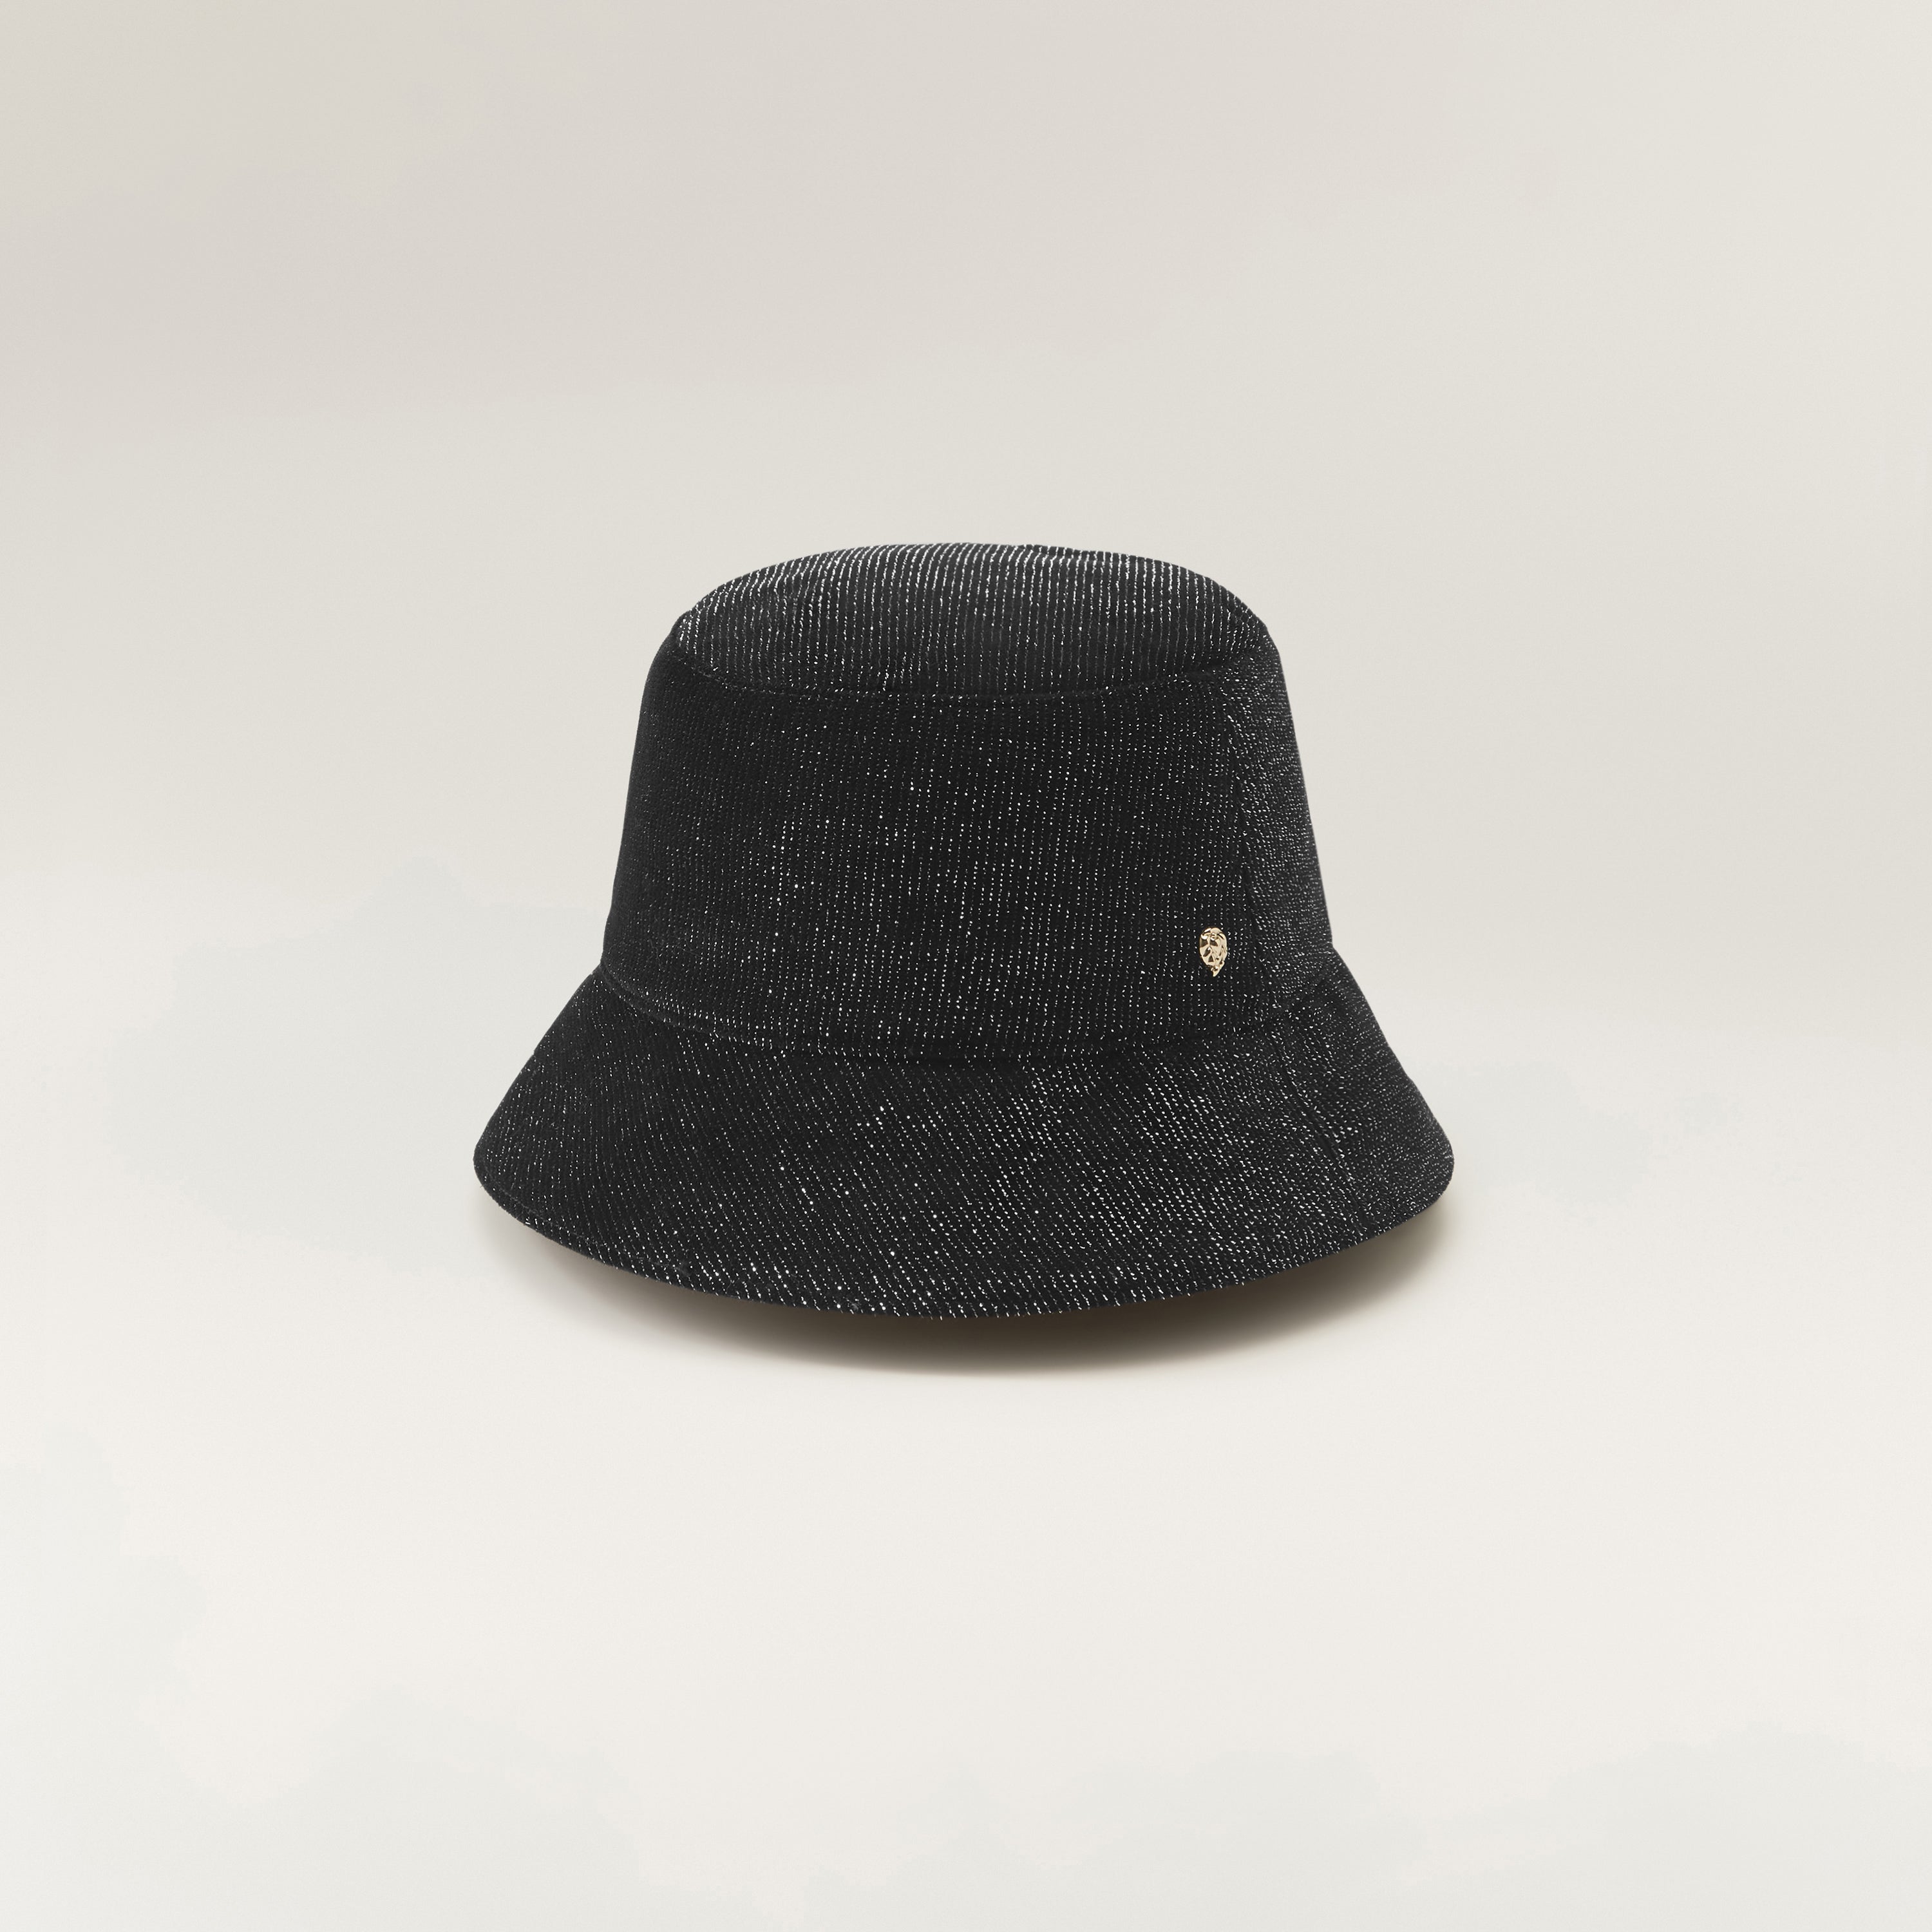 Helen Kaminski AU Official Site | Hats, Bags & Accessories